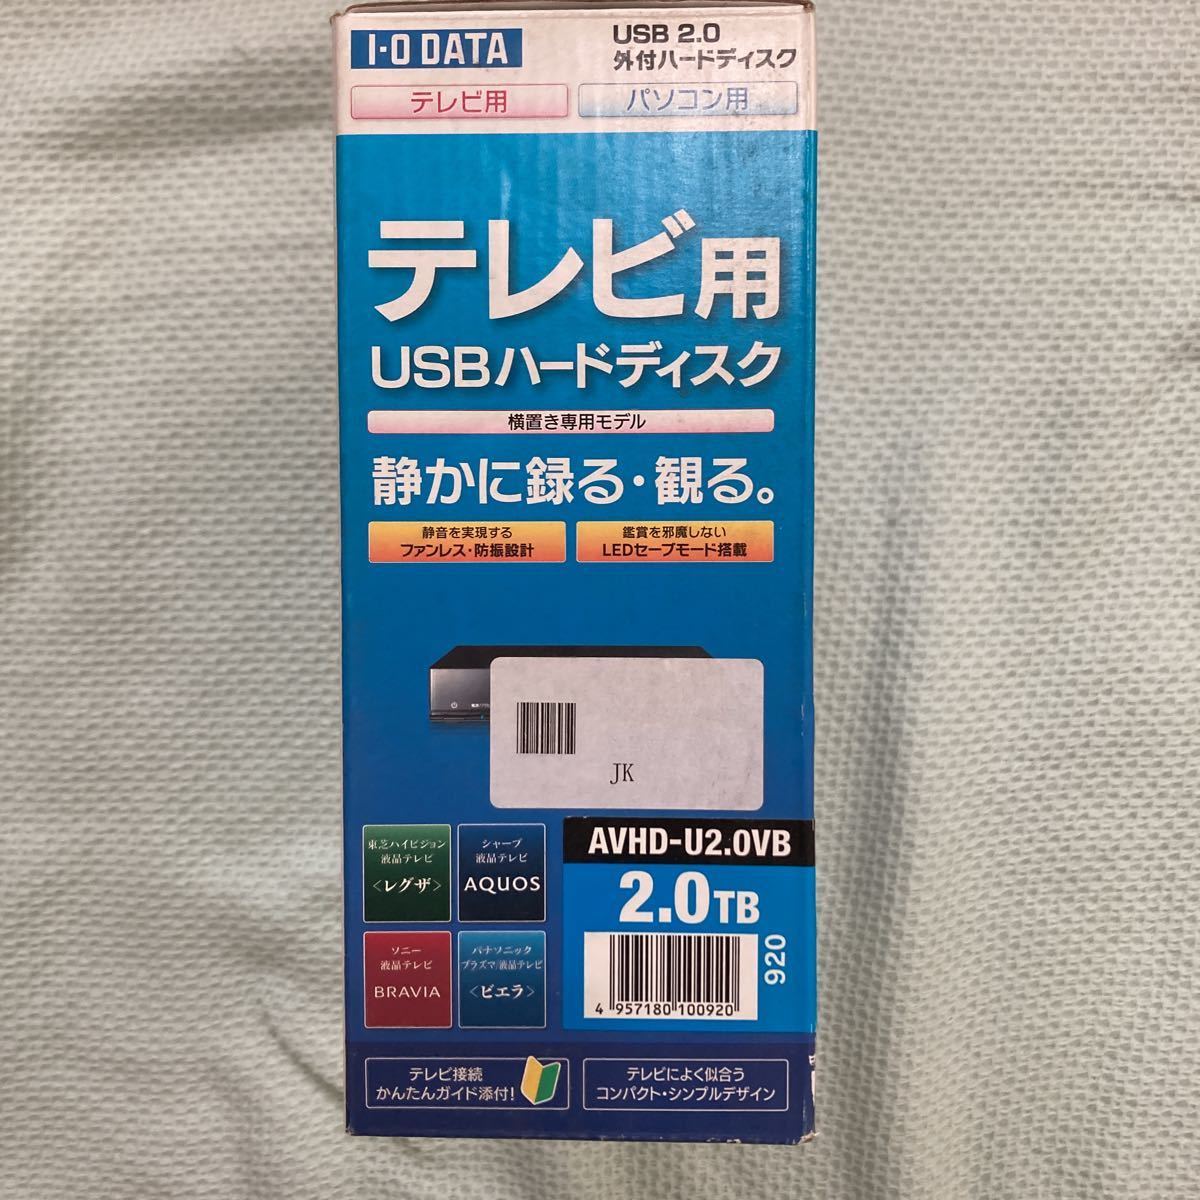 I-O DATA 外付けハードディスク USB レグザ アクオス ブラビア ビエラ LG AVHD-U2.0VB 2.0TE【訳あり品】_画像3